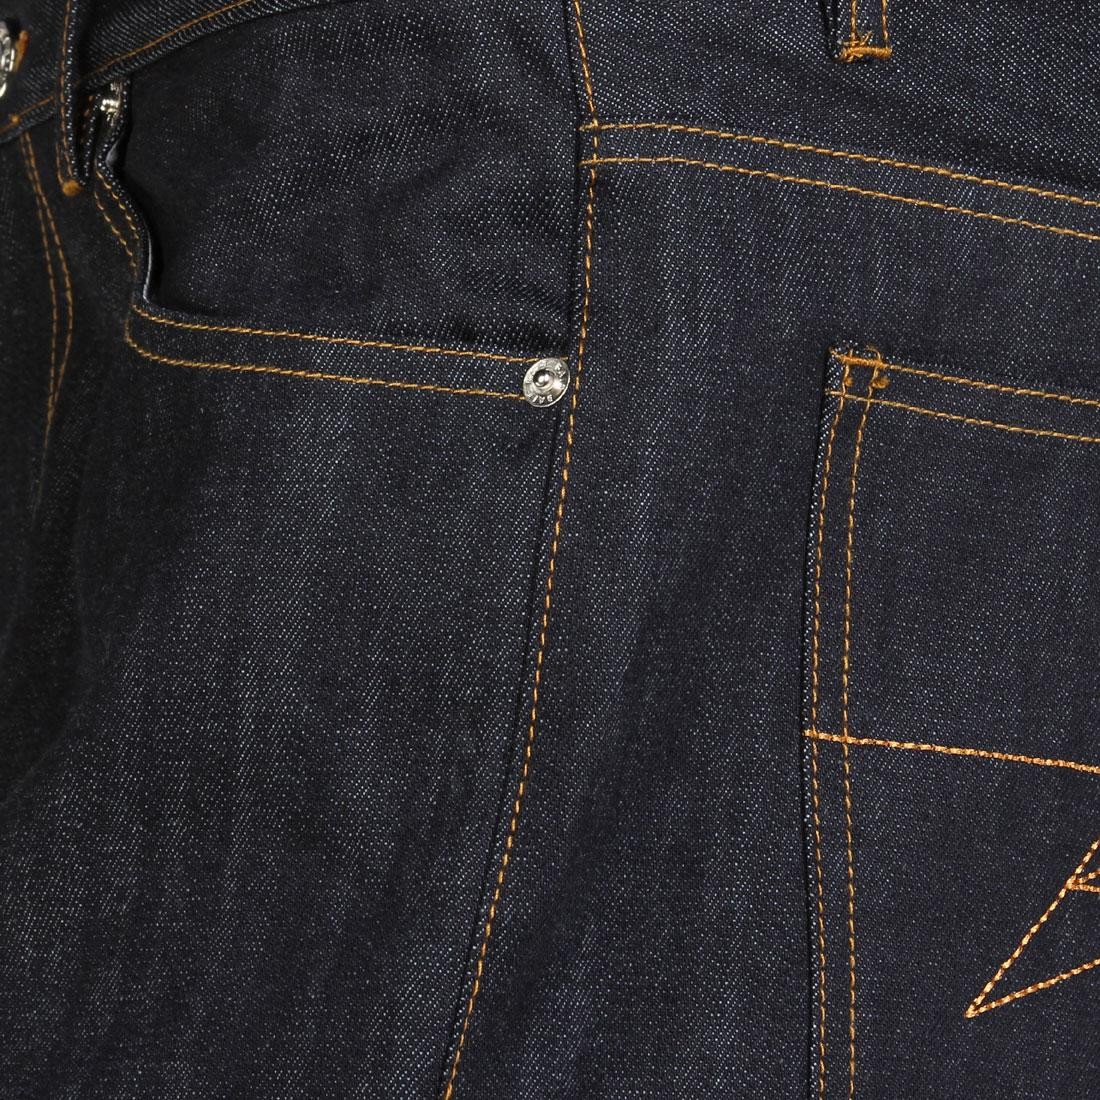 BAIT Basic Taper Jeans (navy / indigo)